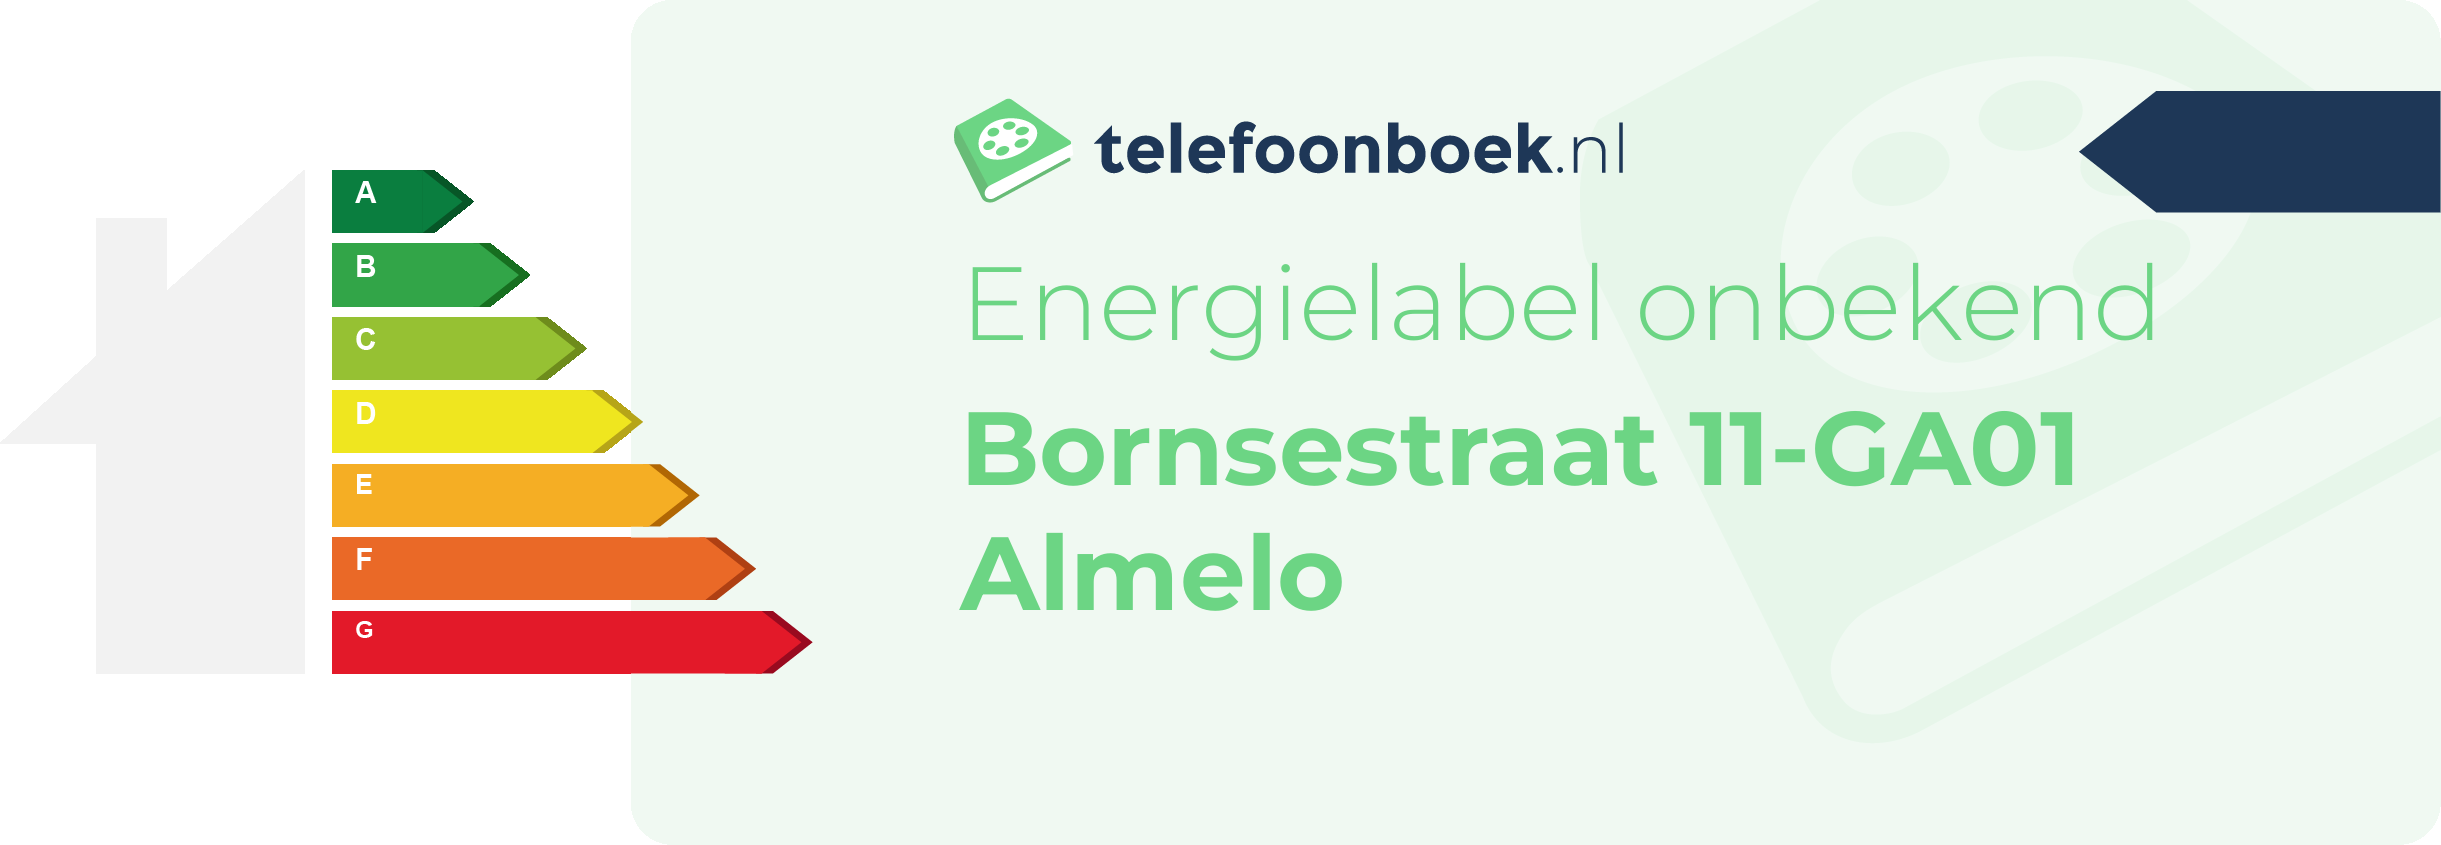 Energielabel Bornsestraat 11-GA01 Almelo